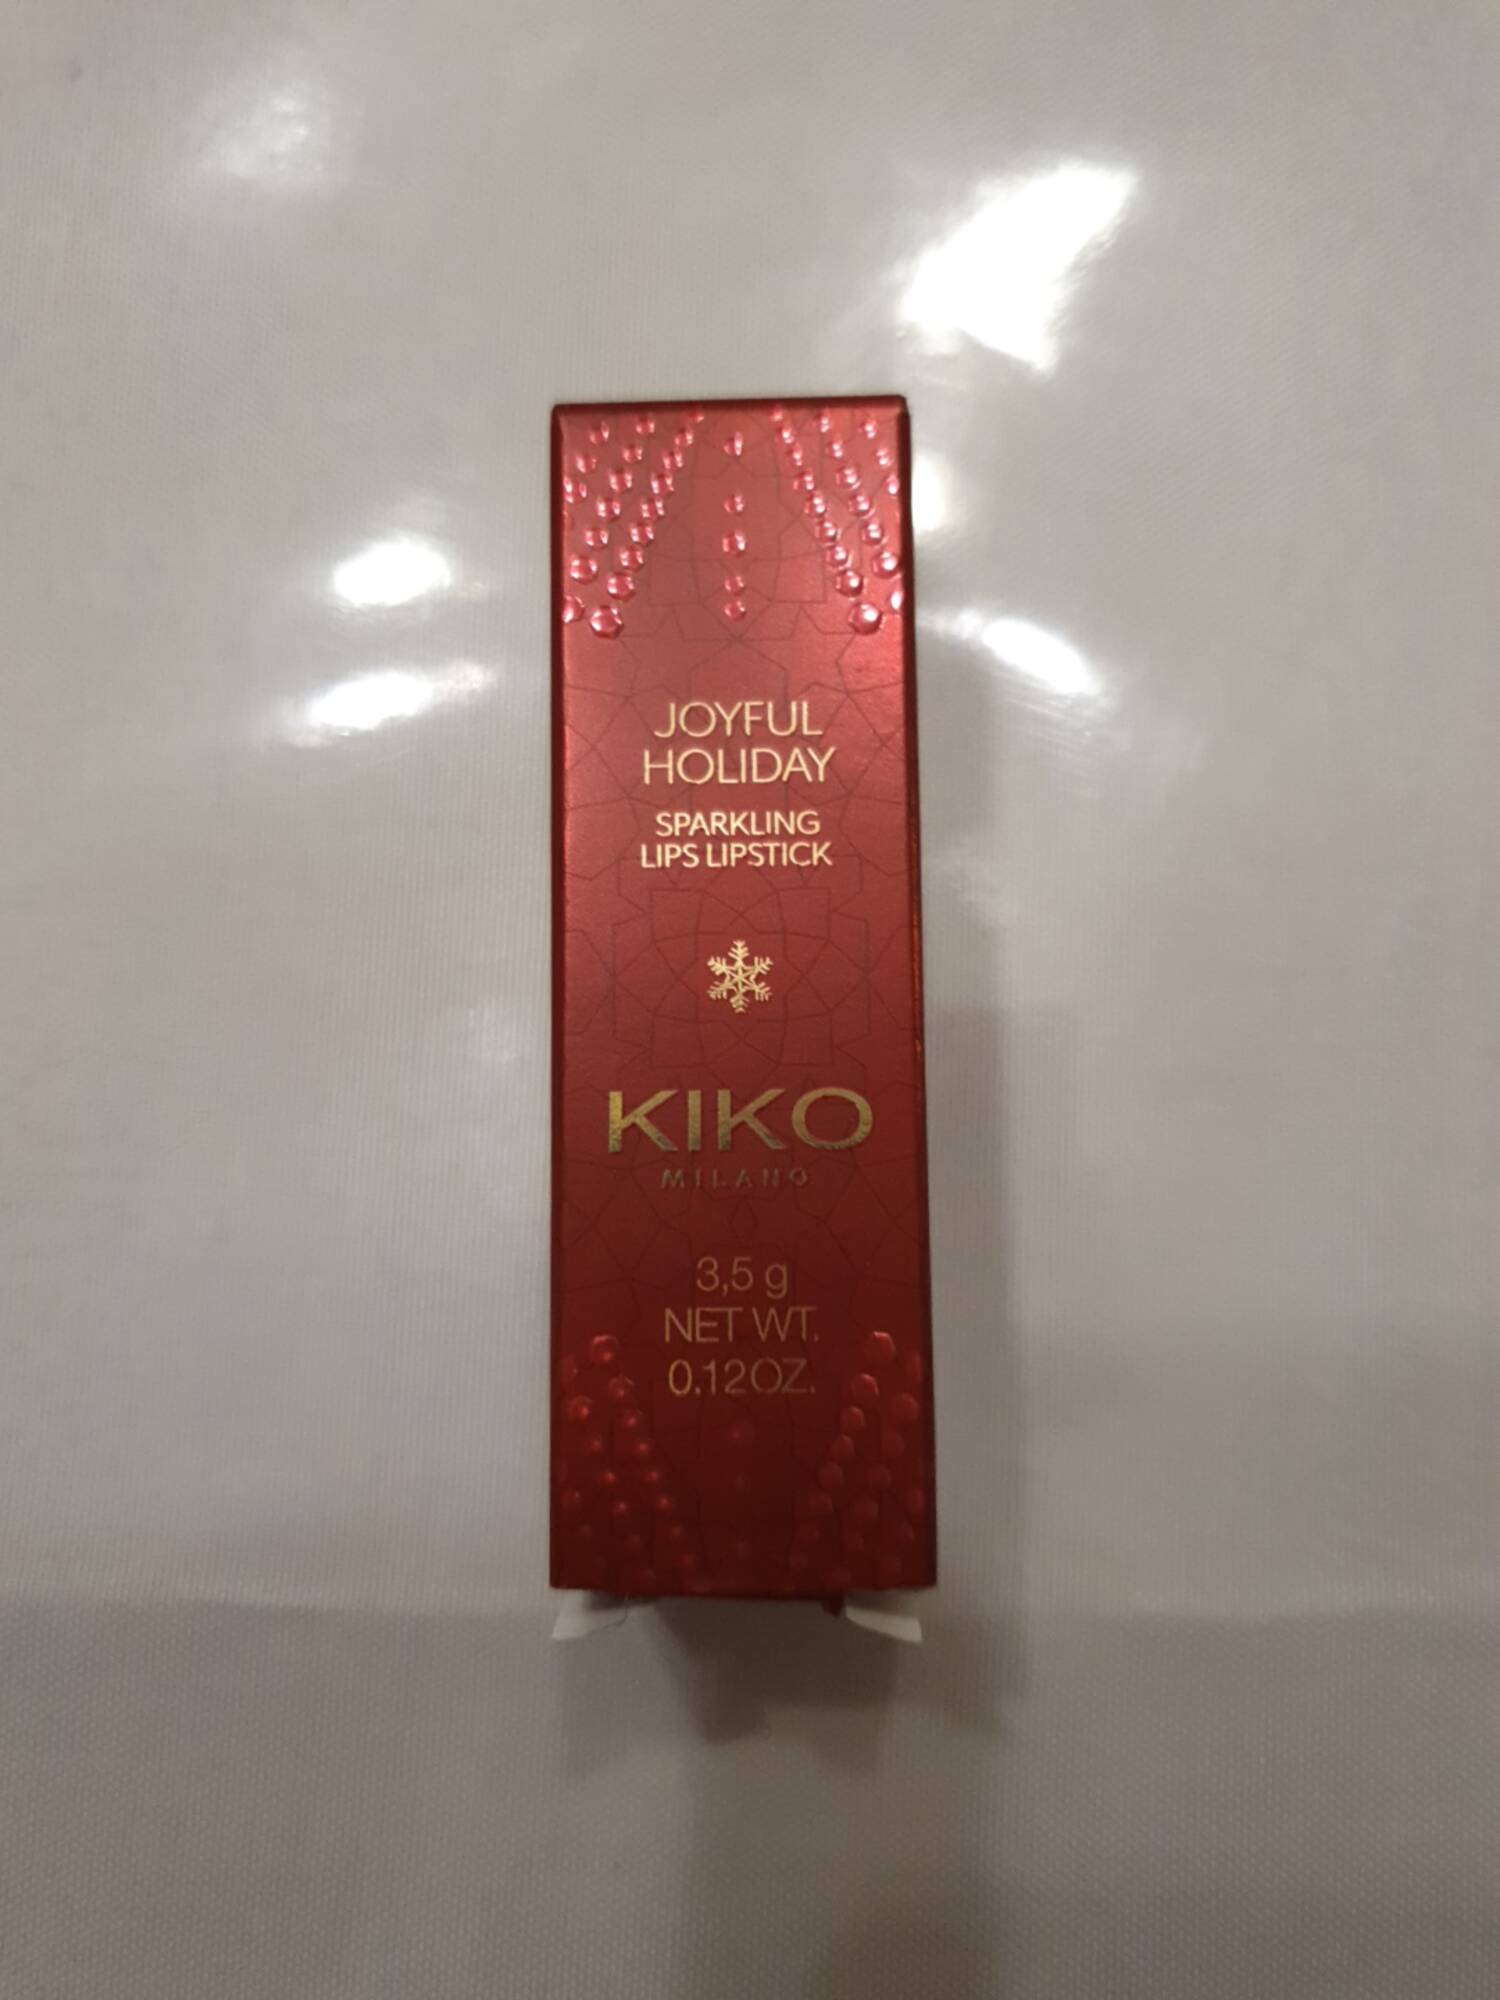 KIKO - Joyful holiday - Sparkling lips lipstick